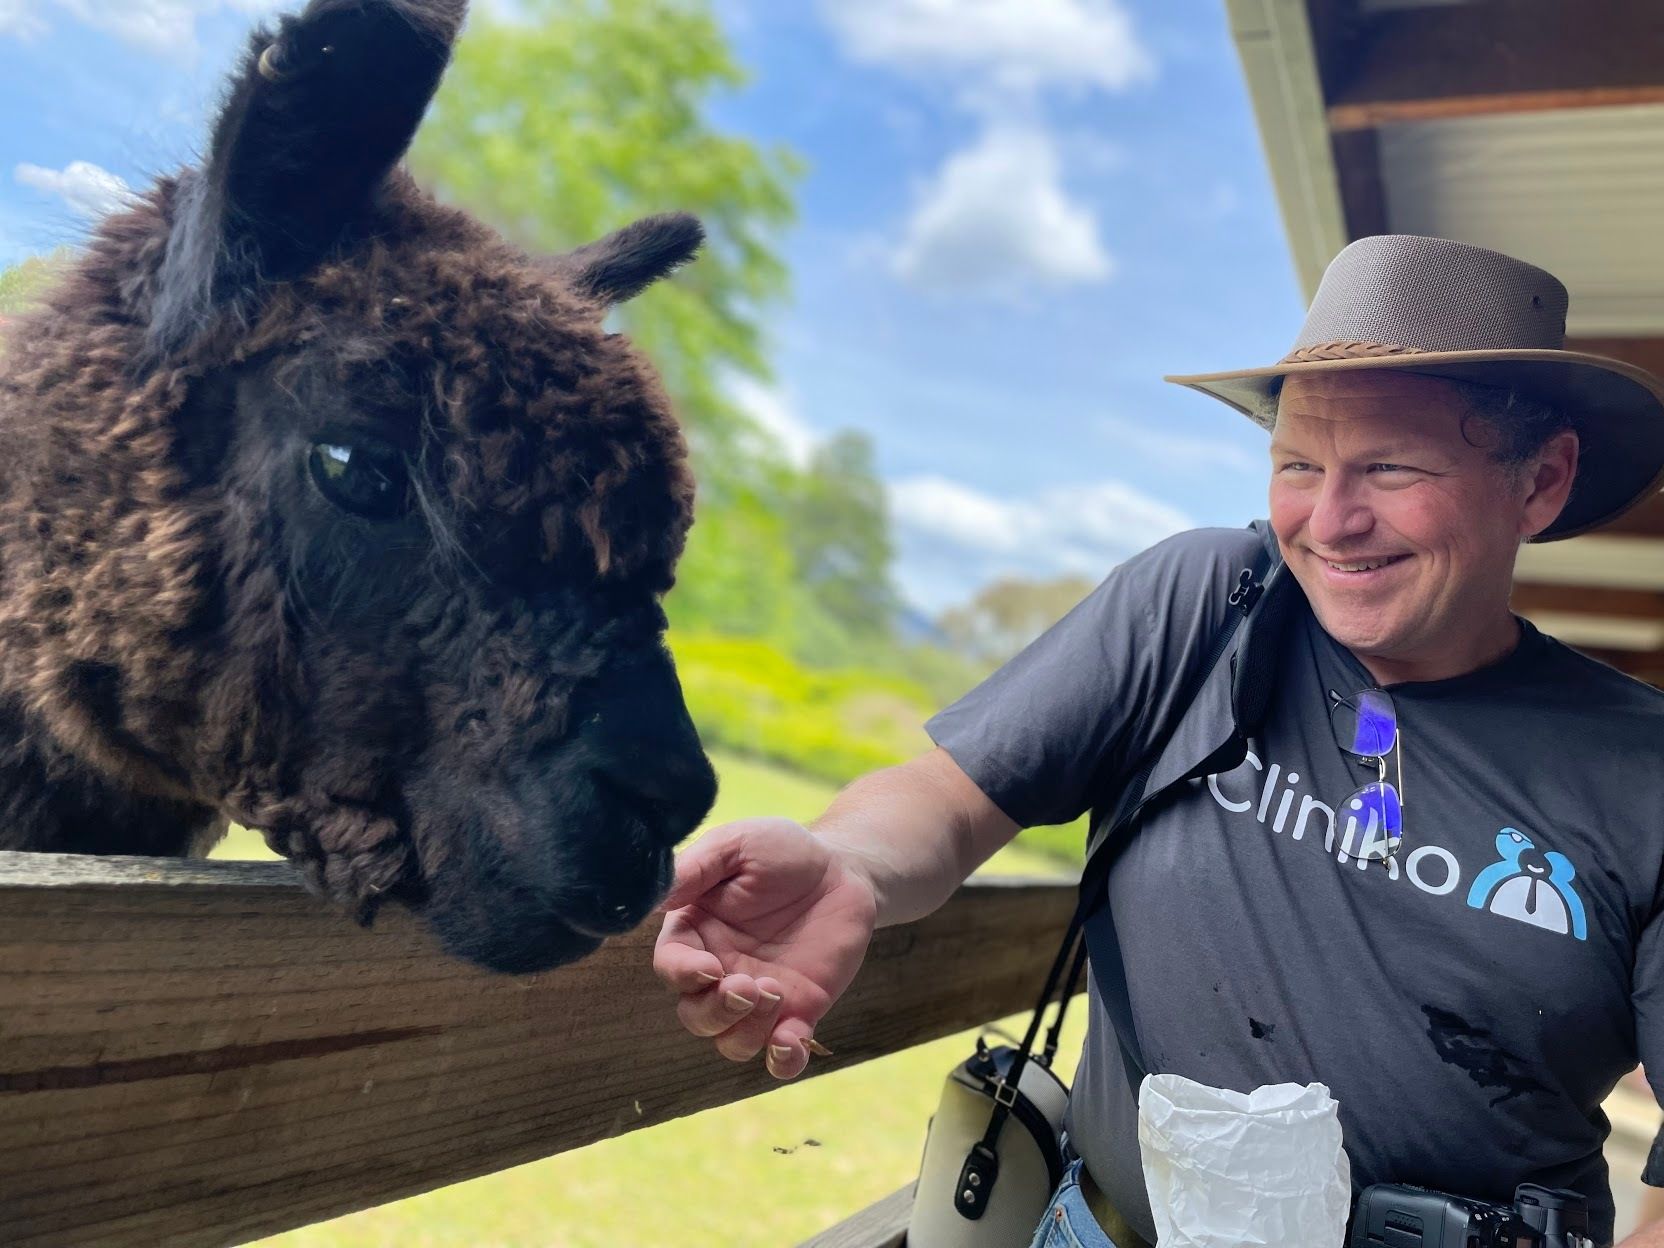 Bill pictured feeding an alpaca